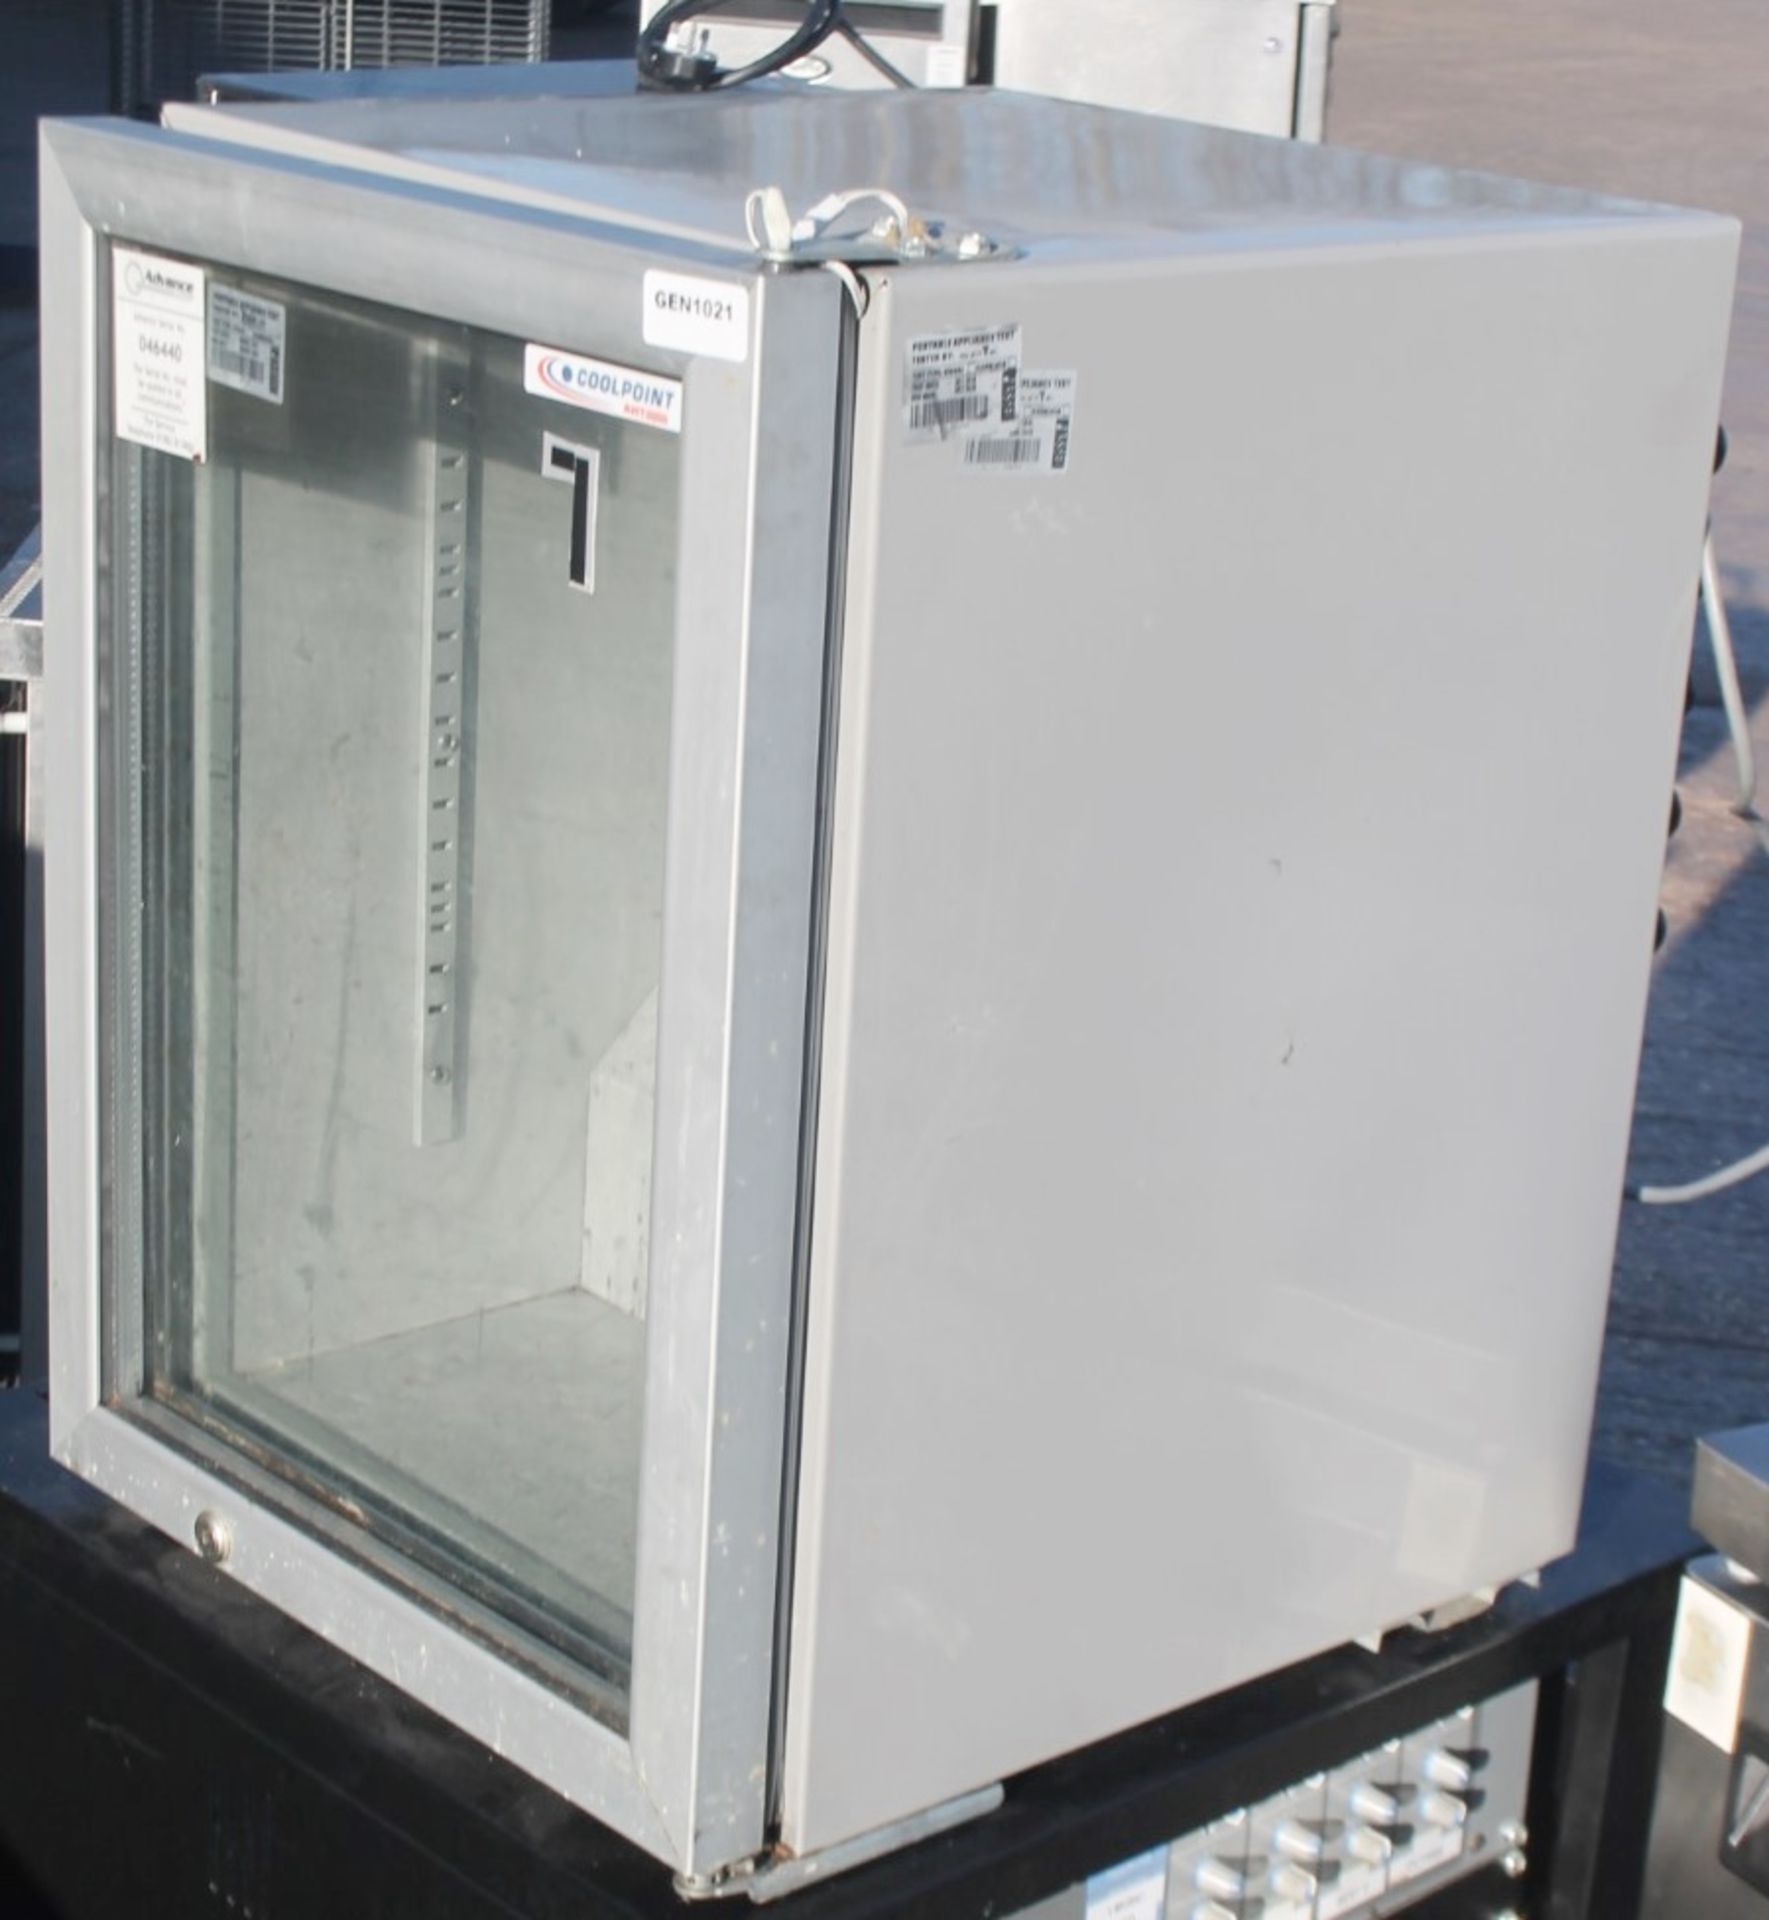 1 x COOLPOINT Commercial Countertop Cooler - 220-240v - CL805 - Ref: GEN1021 VP LON - Location: